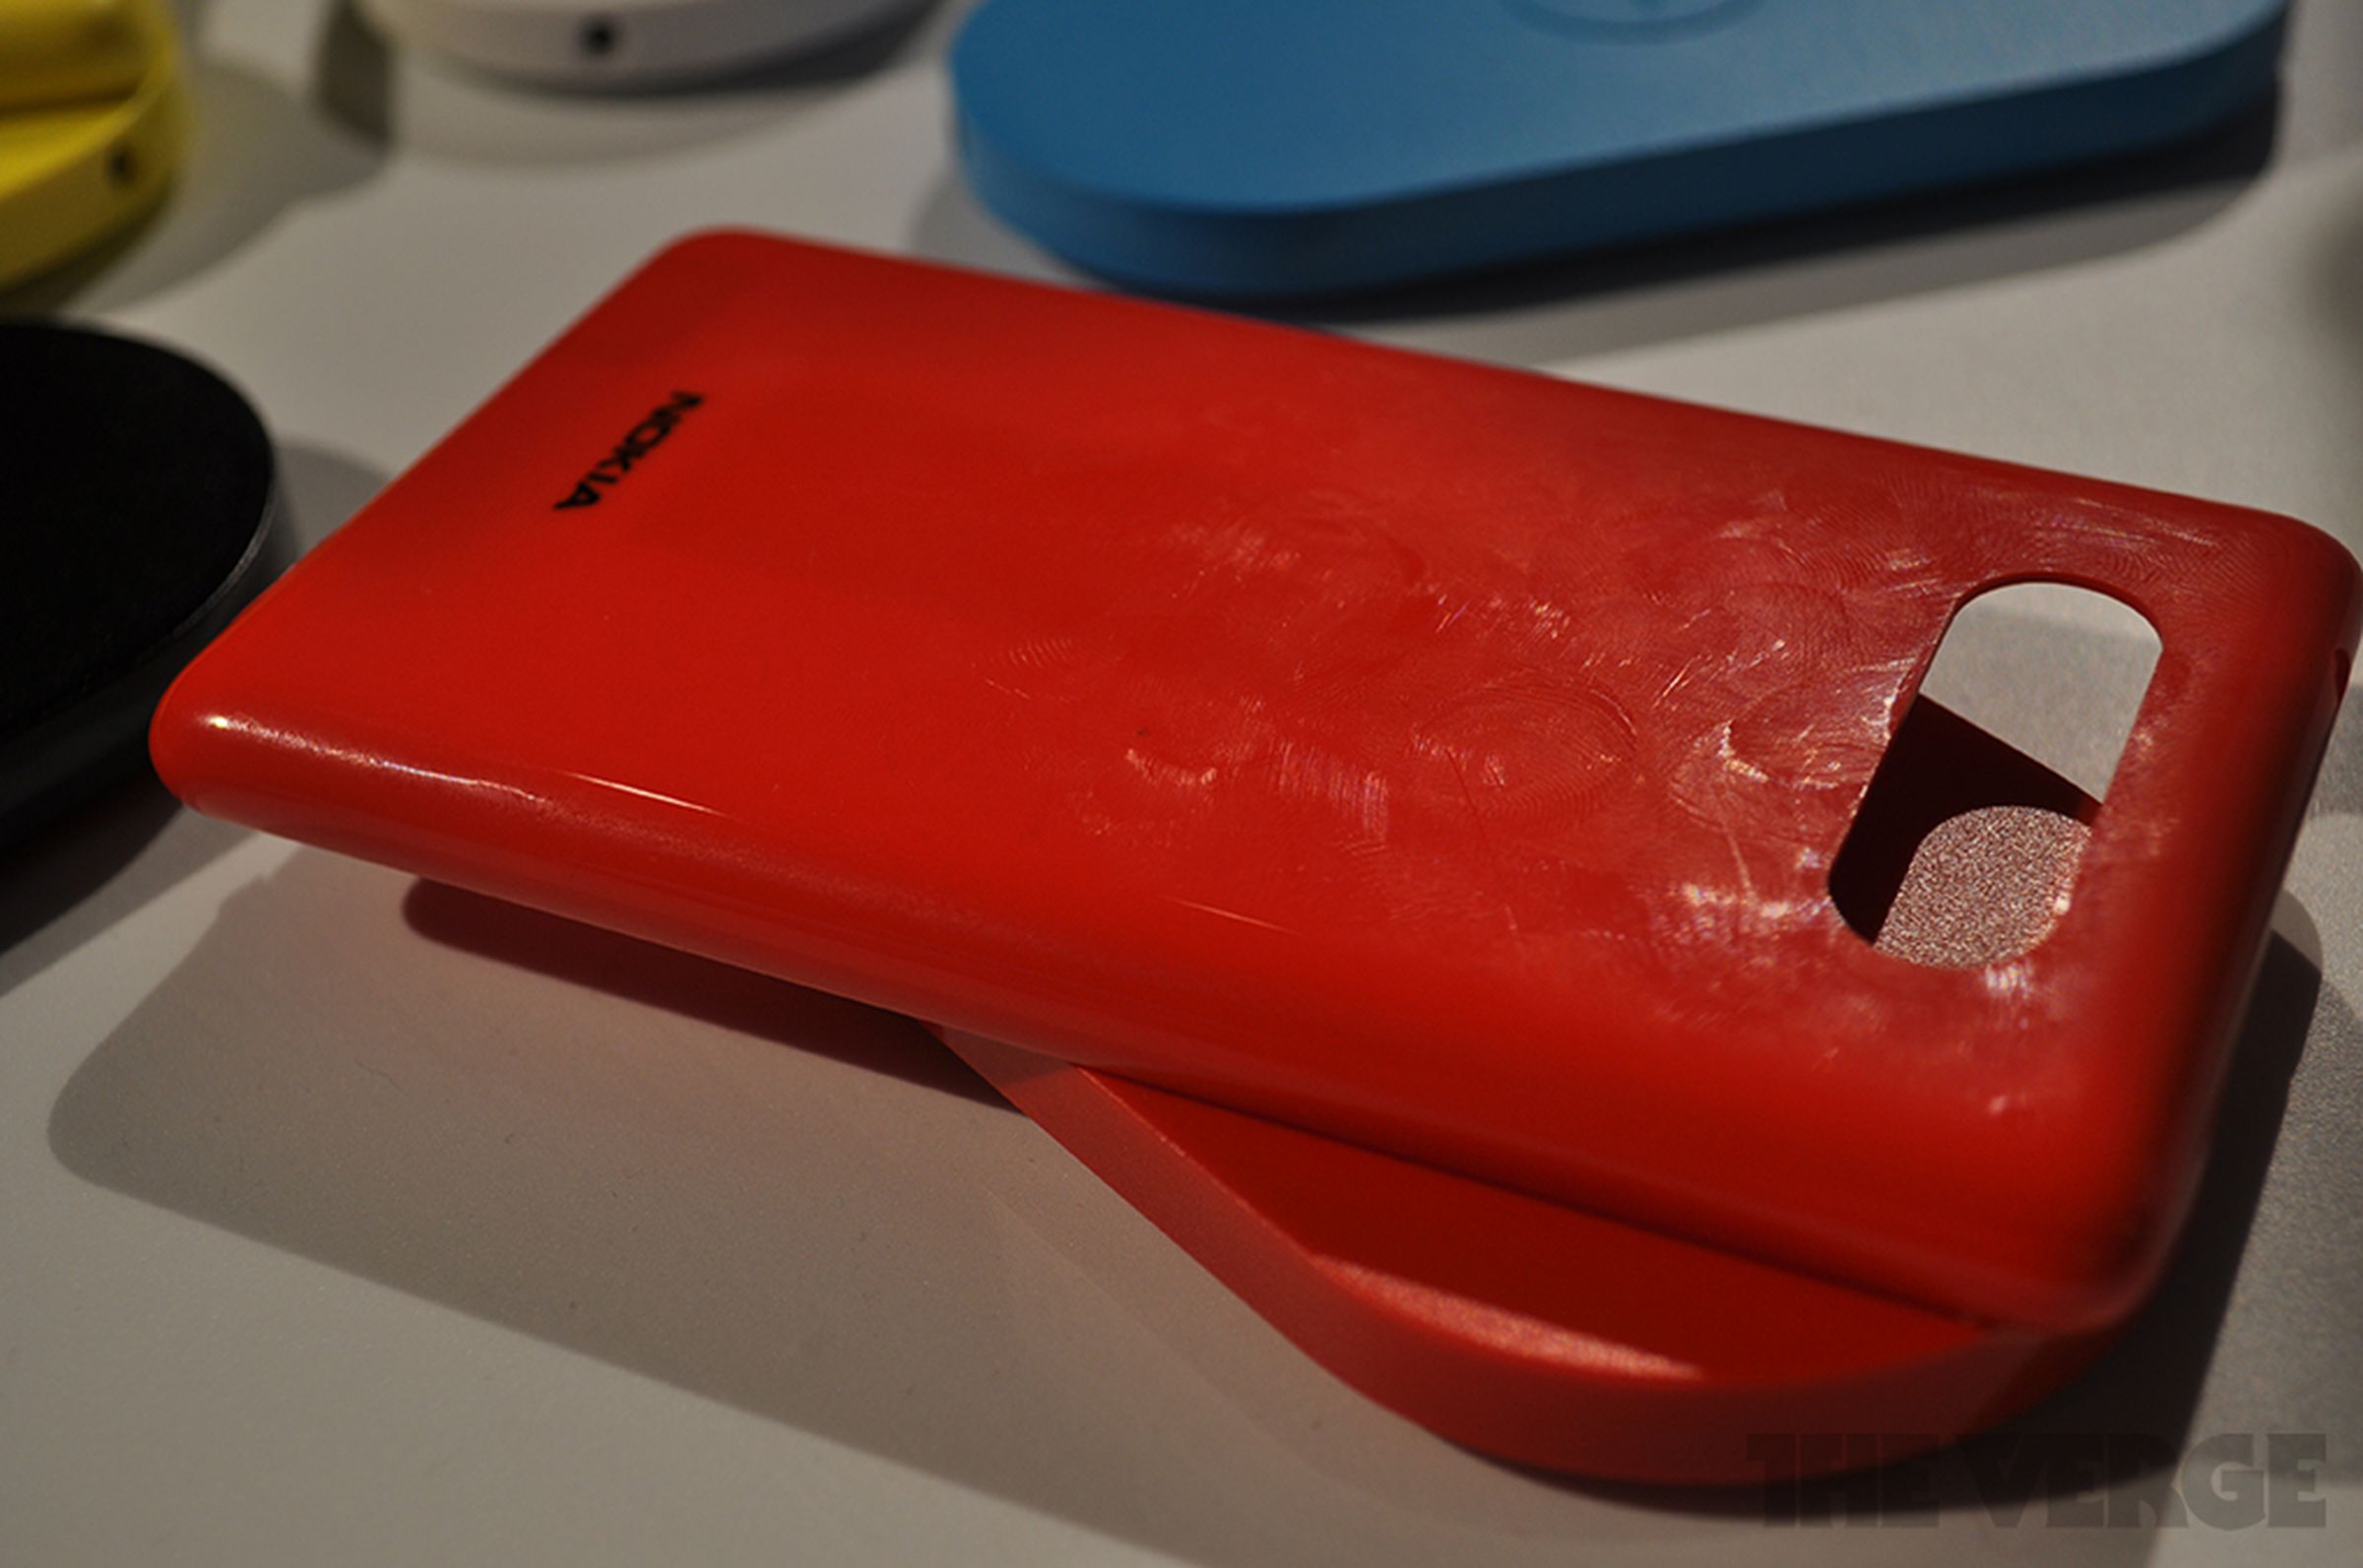 Nokia Lumia 820 hands-on photos